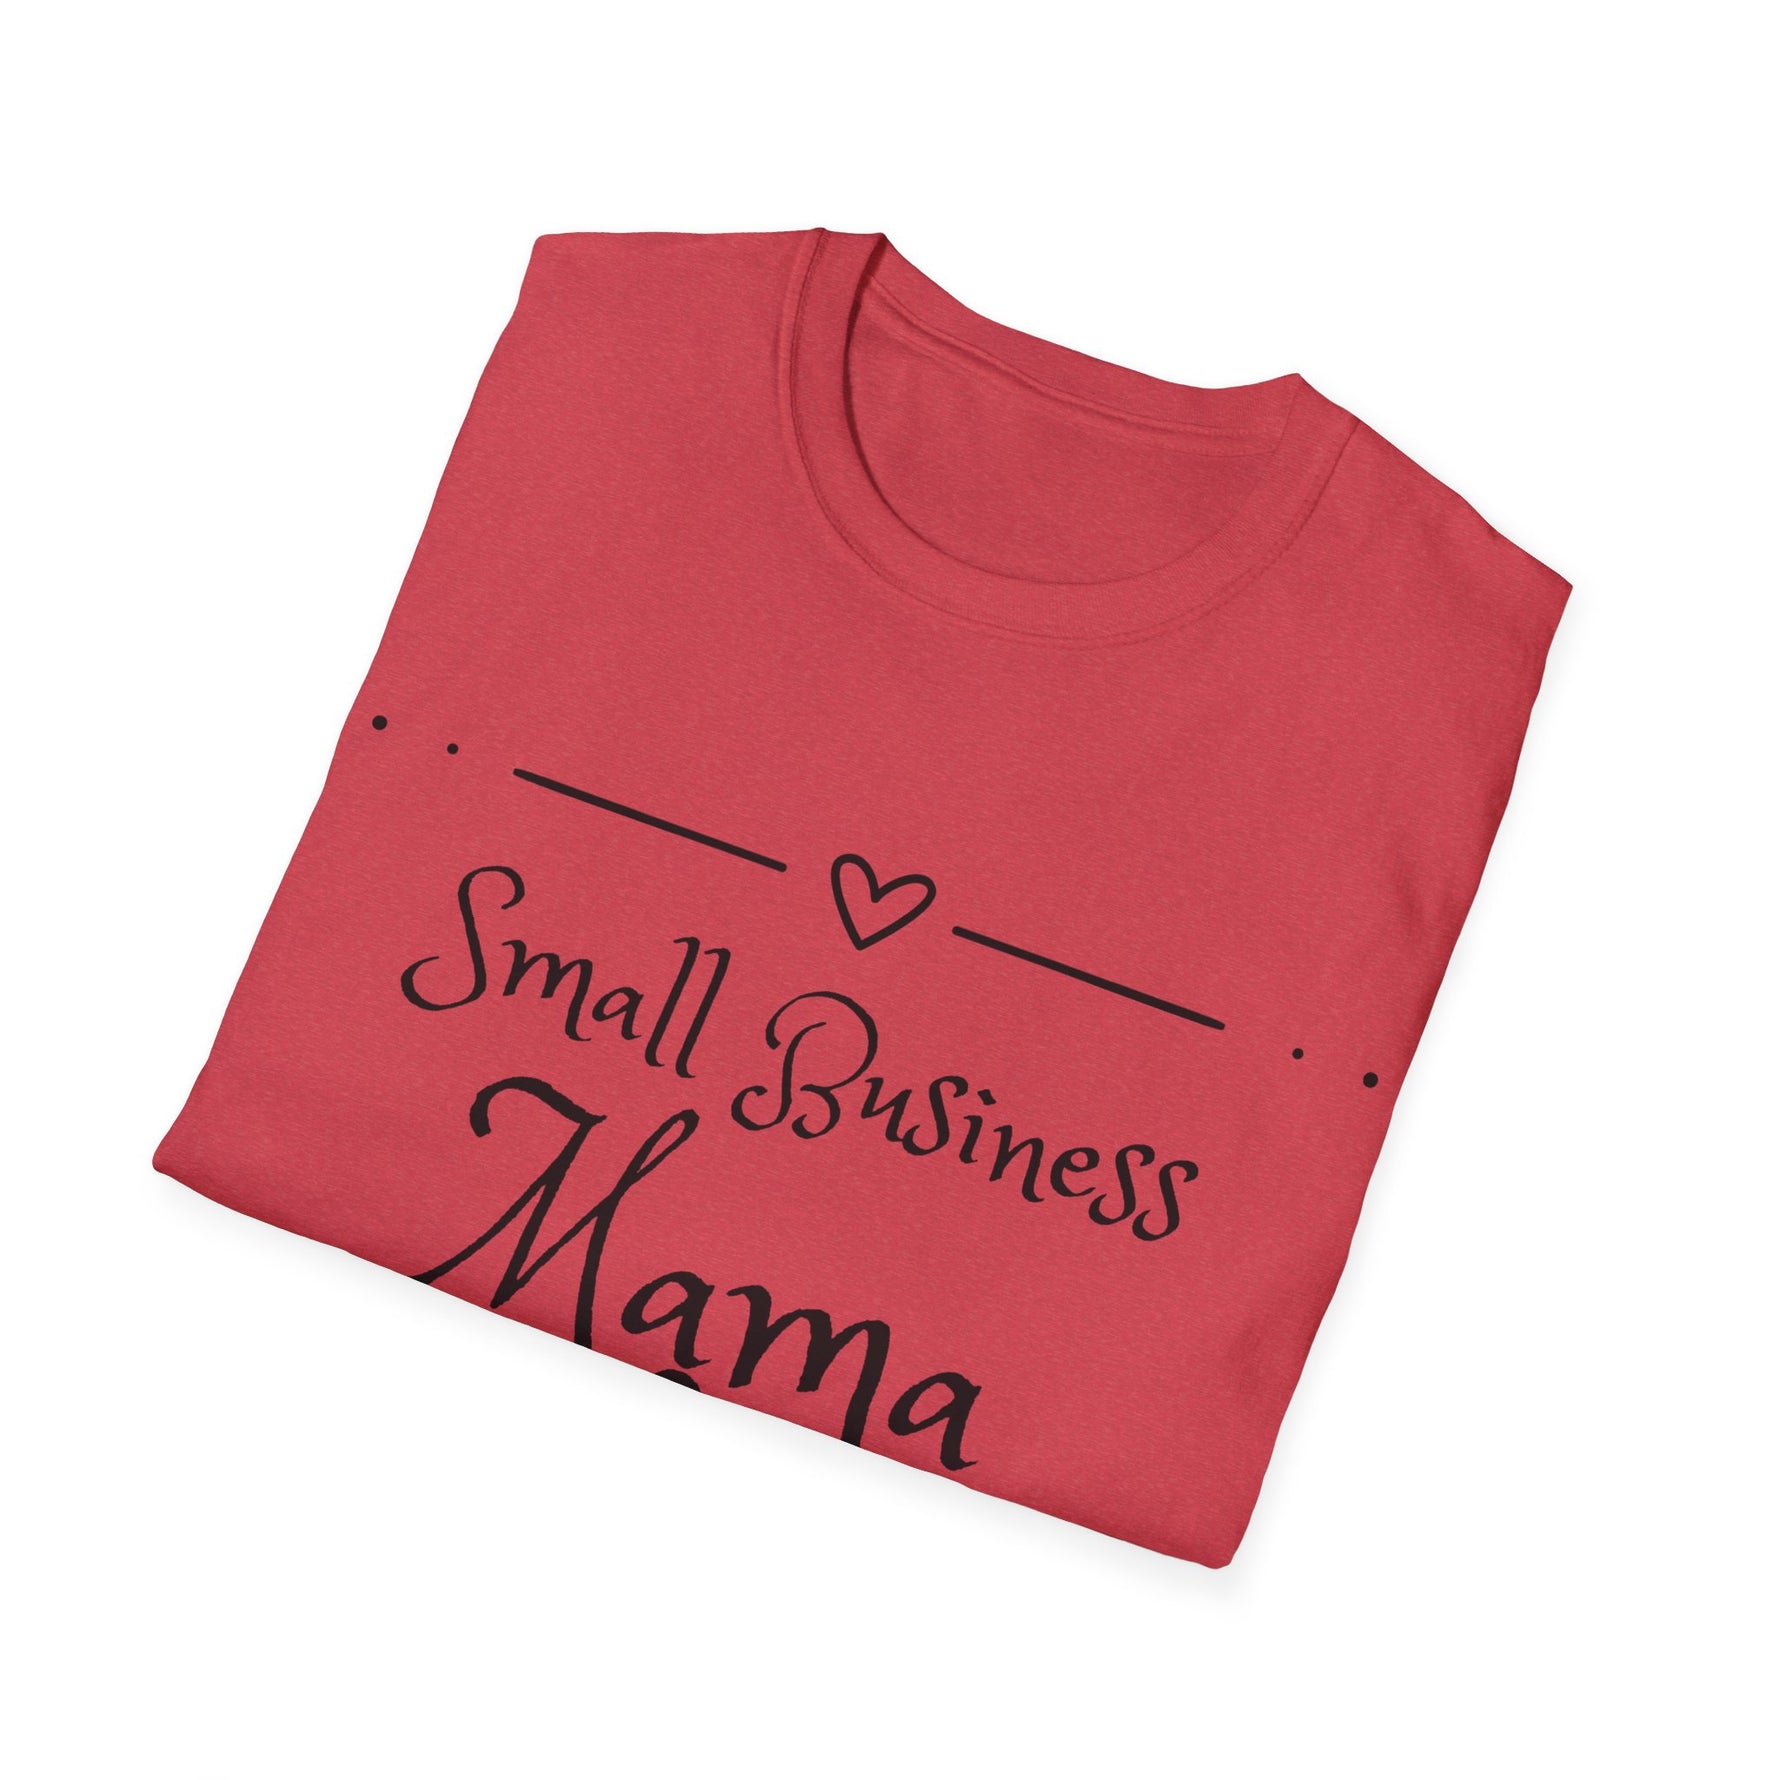 Small Business Mama Unisex T-Shirt-Ashley&#39;s Artistries